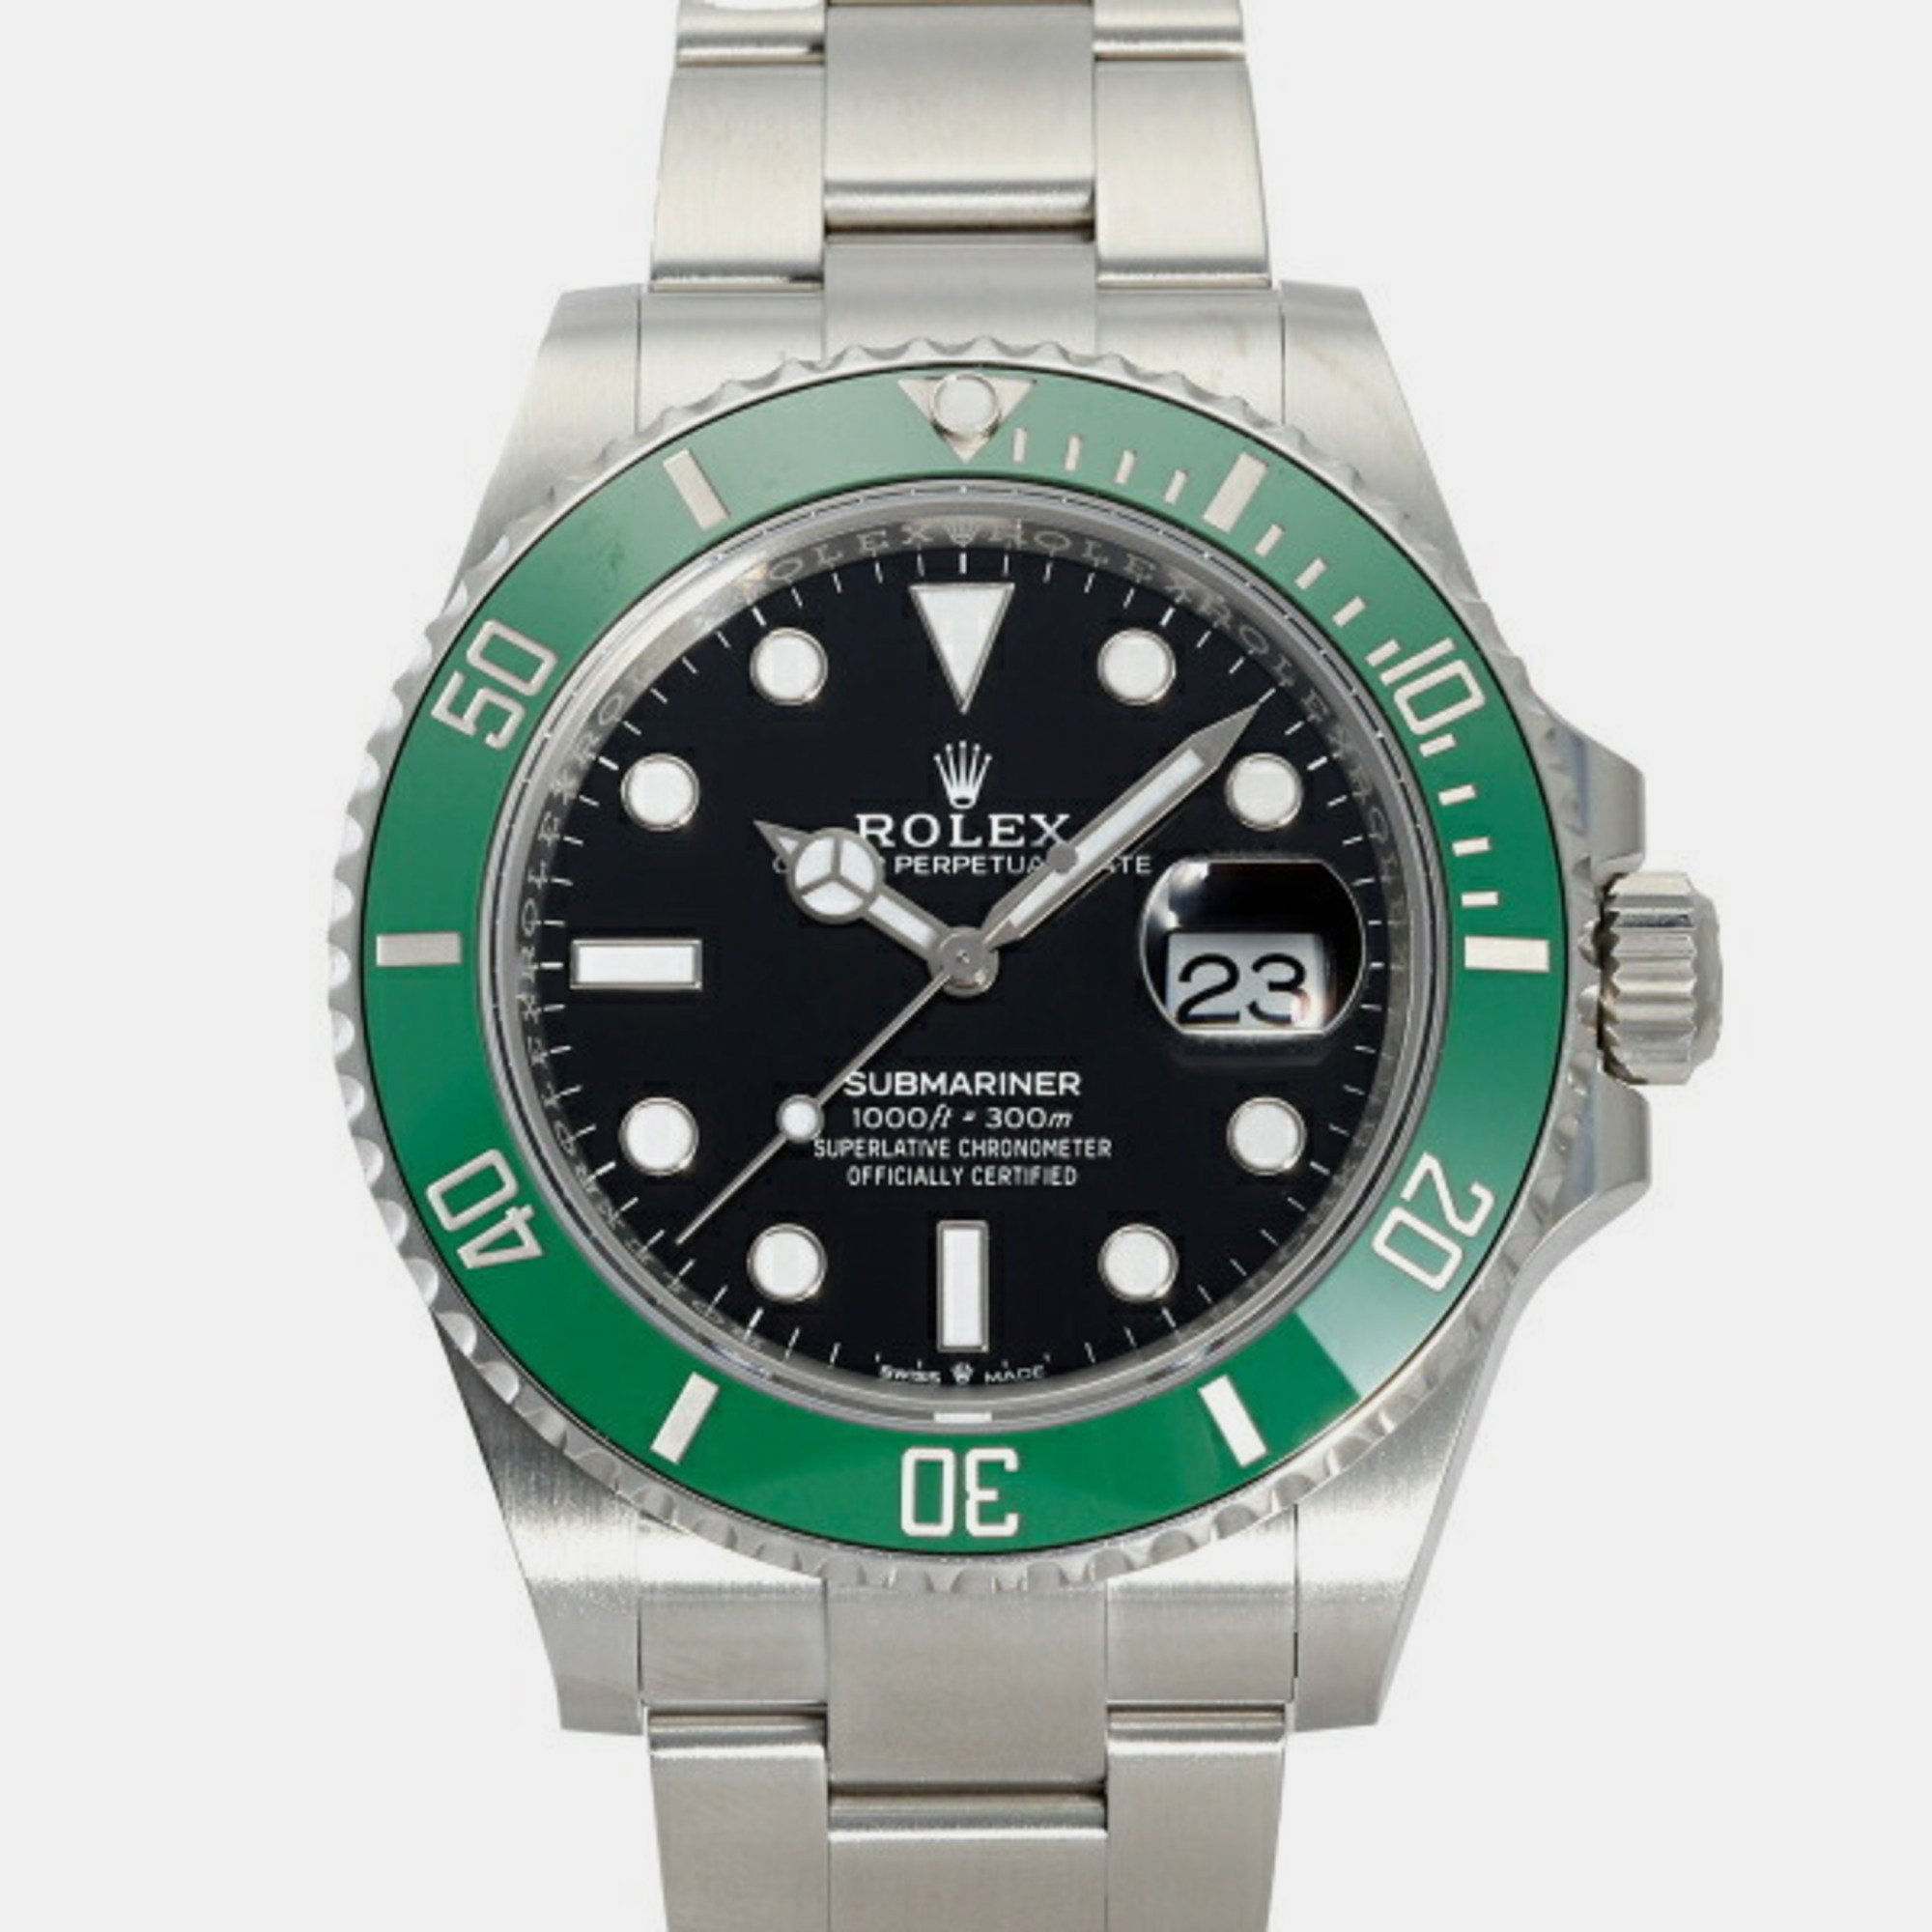 Rolex black stainless steel and ceramic submariner 126610lv men's wristwatch 42mm